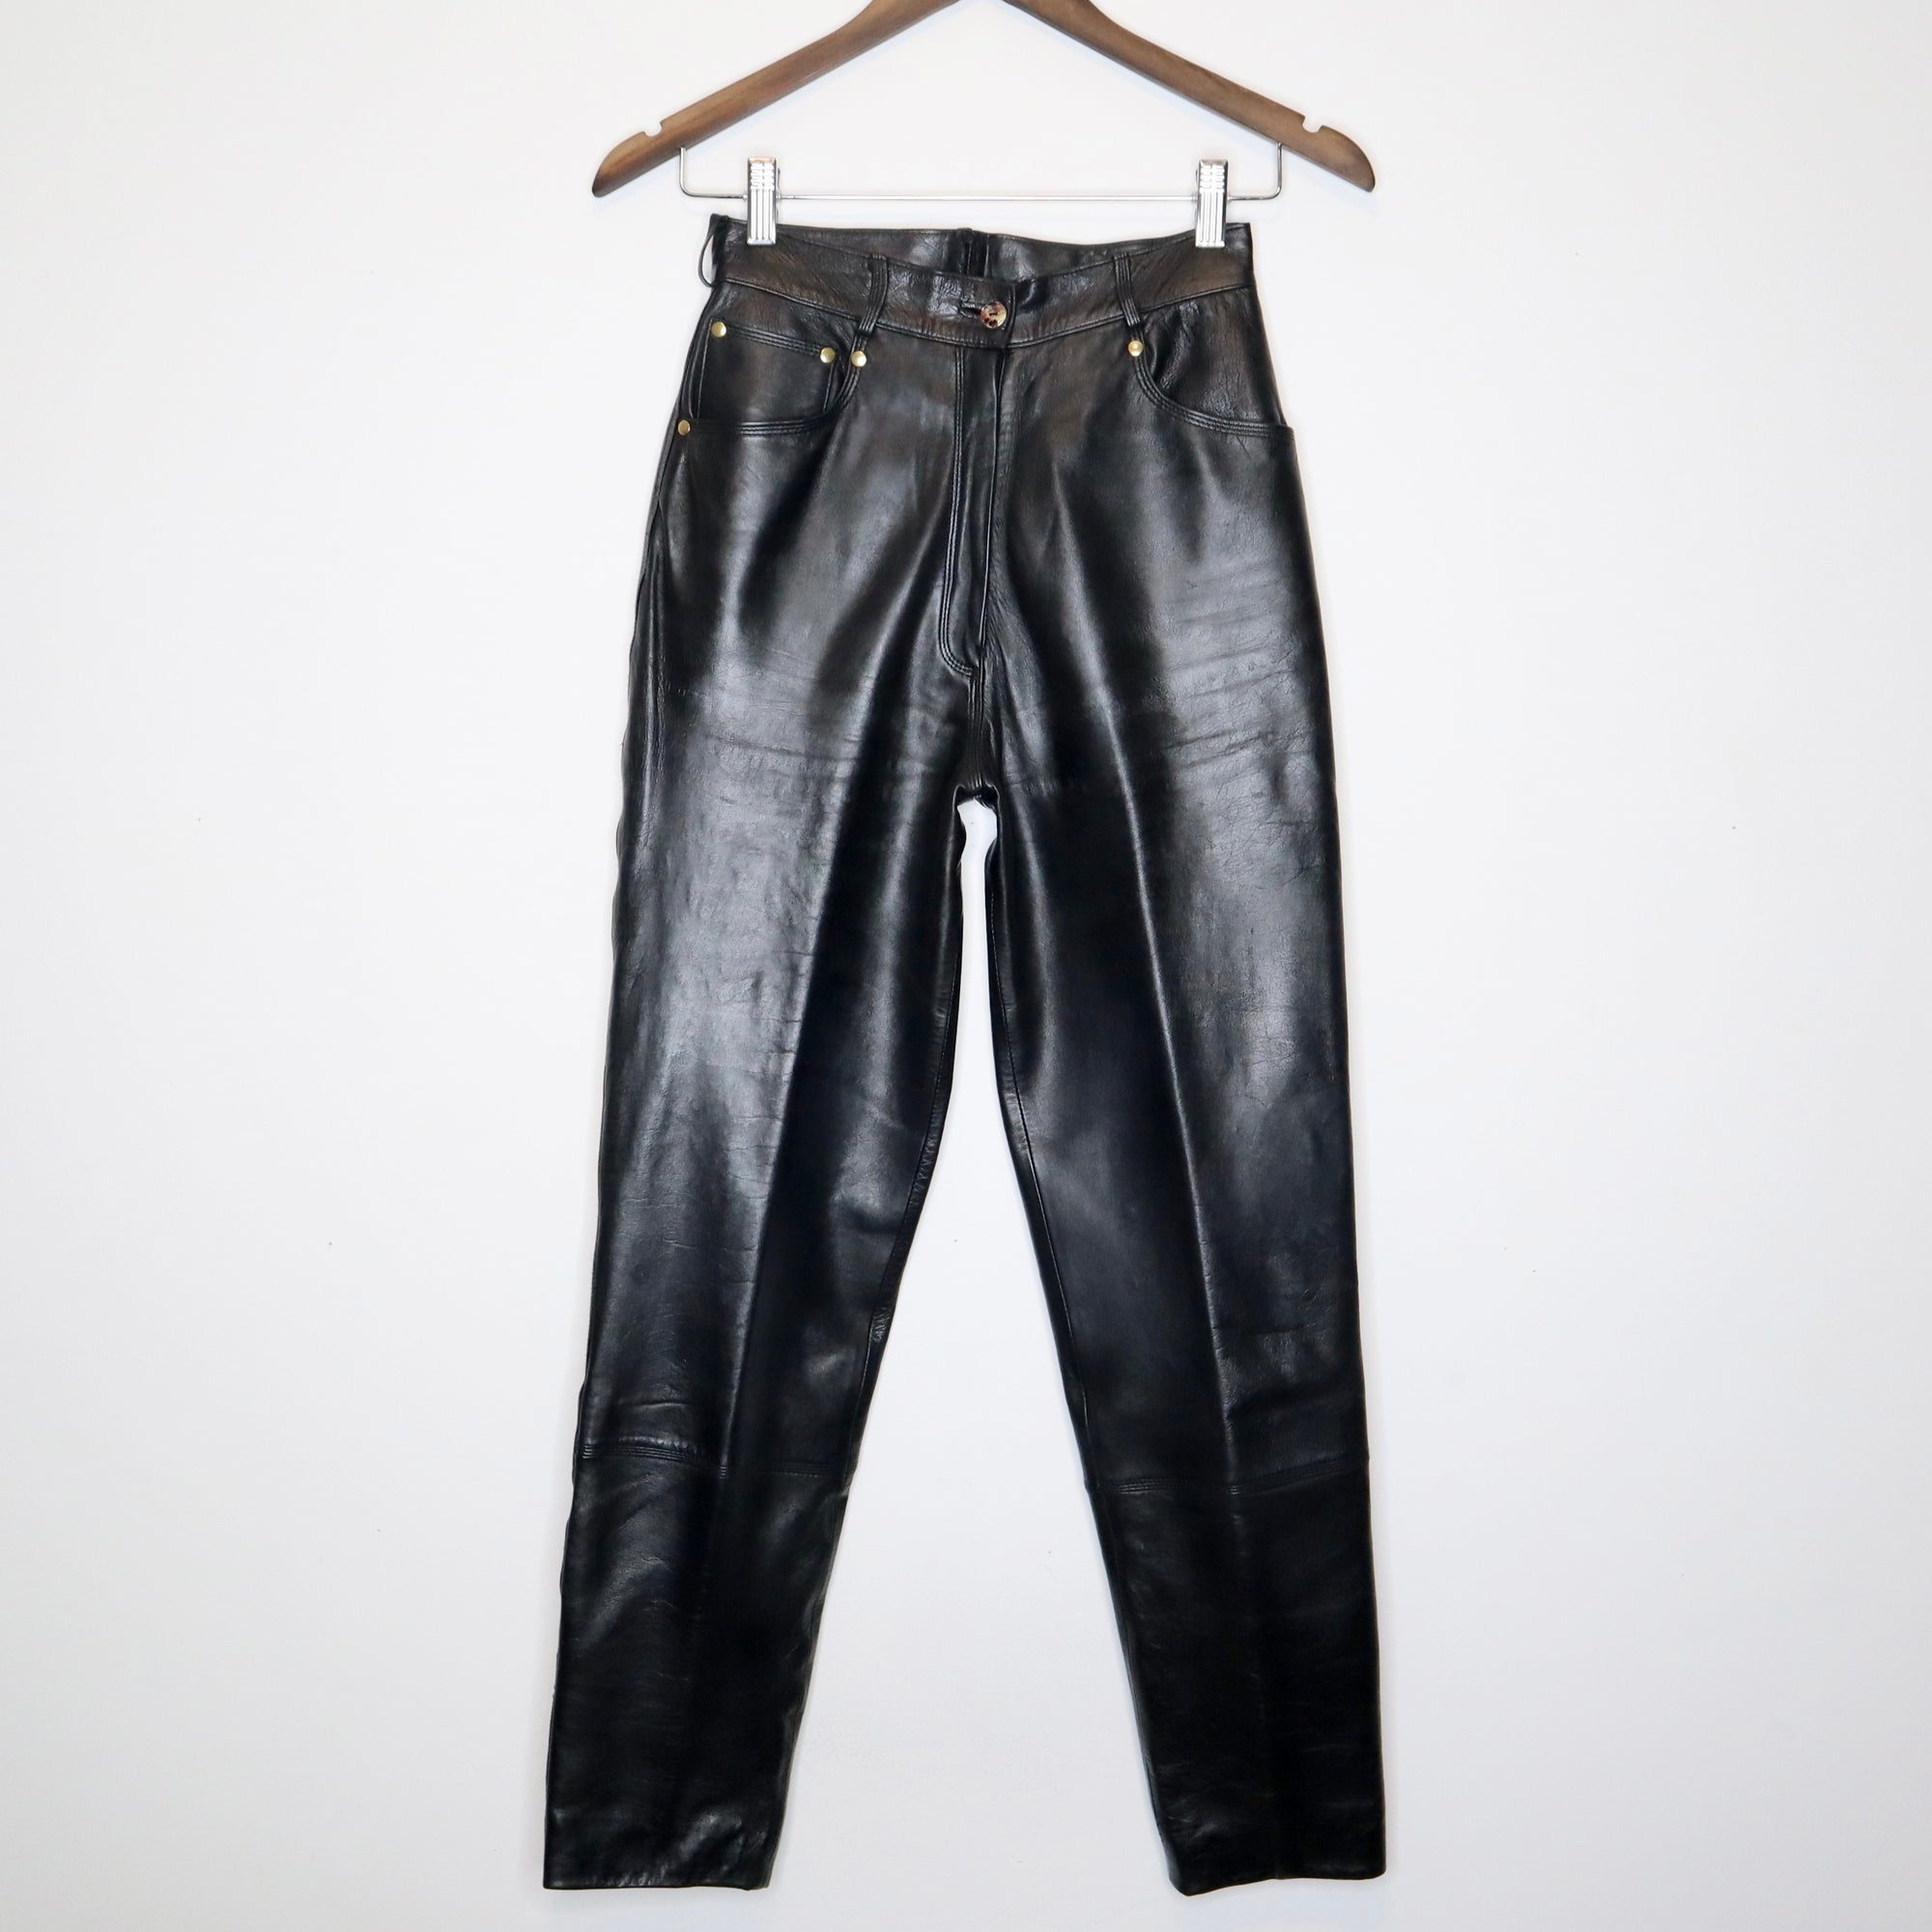 Designer Black Leather Pants (Small)